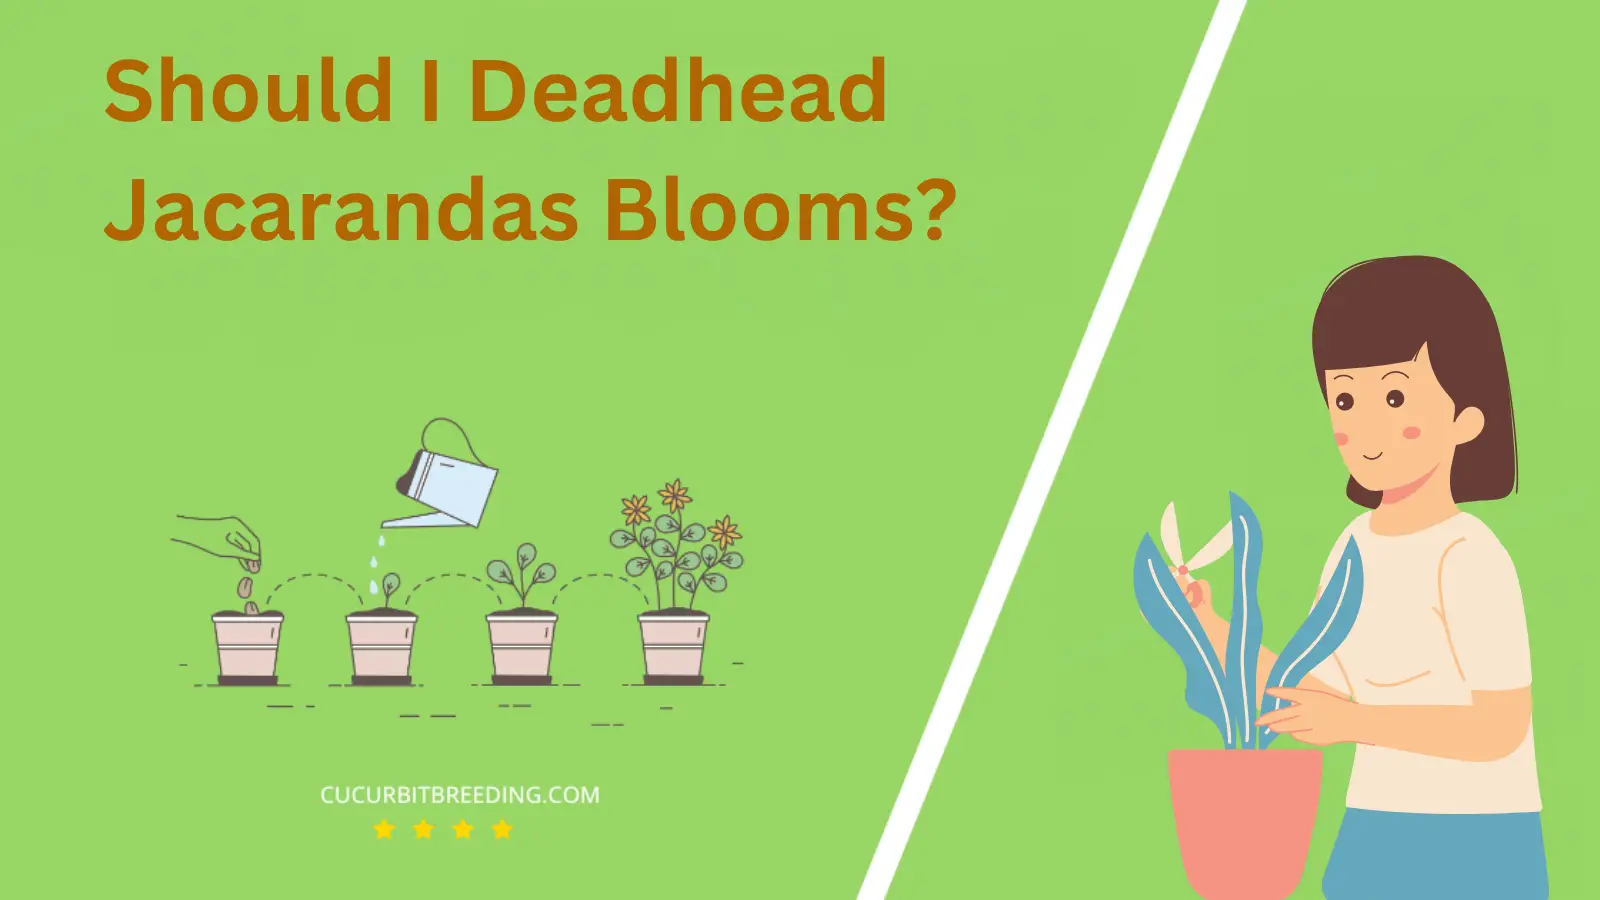 Should I Deadhead Jacarandas Blooms?